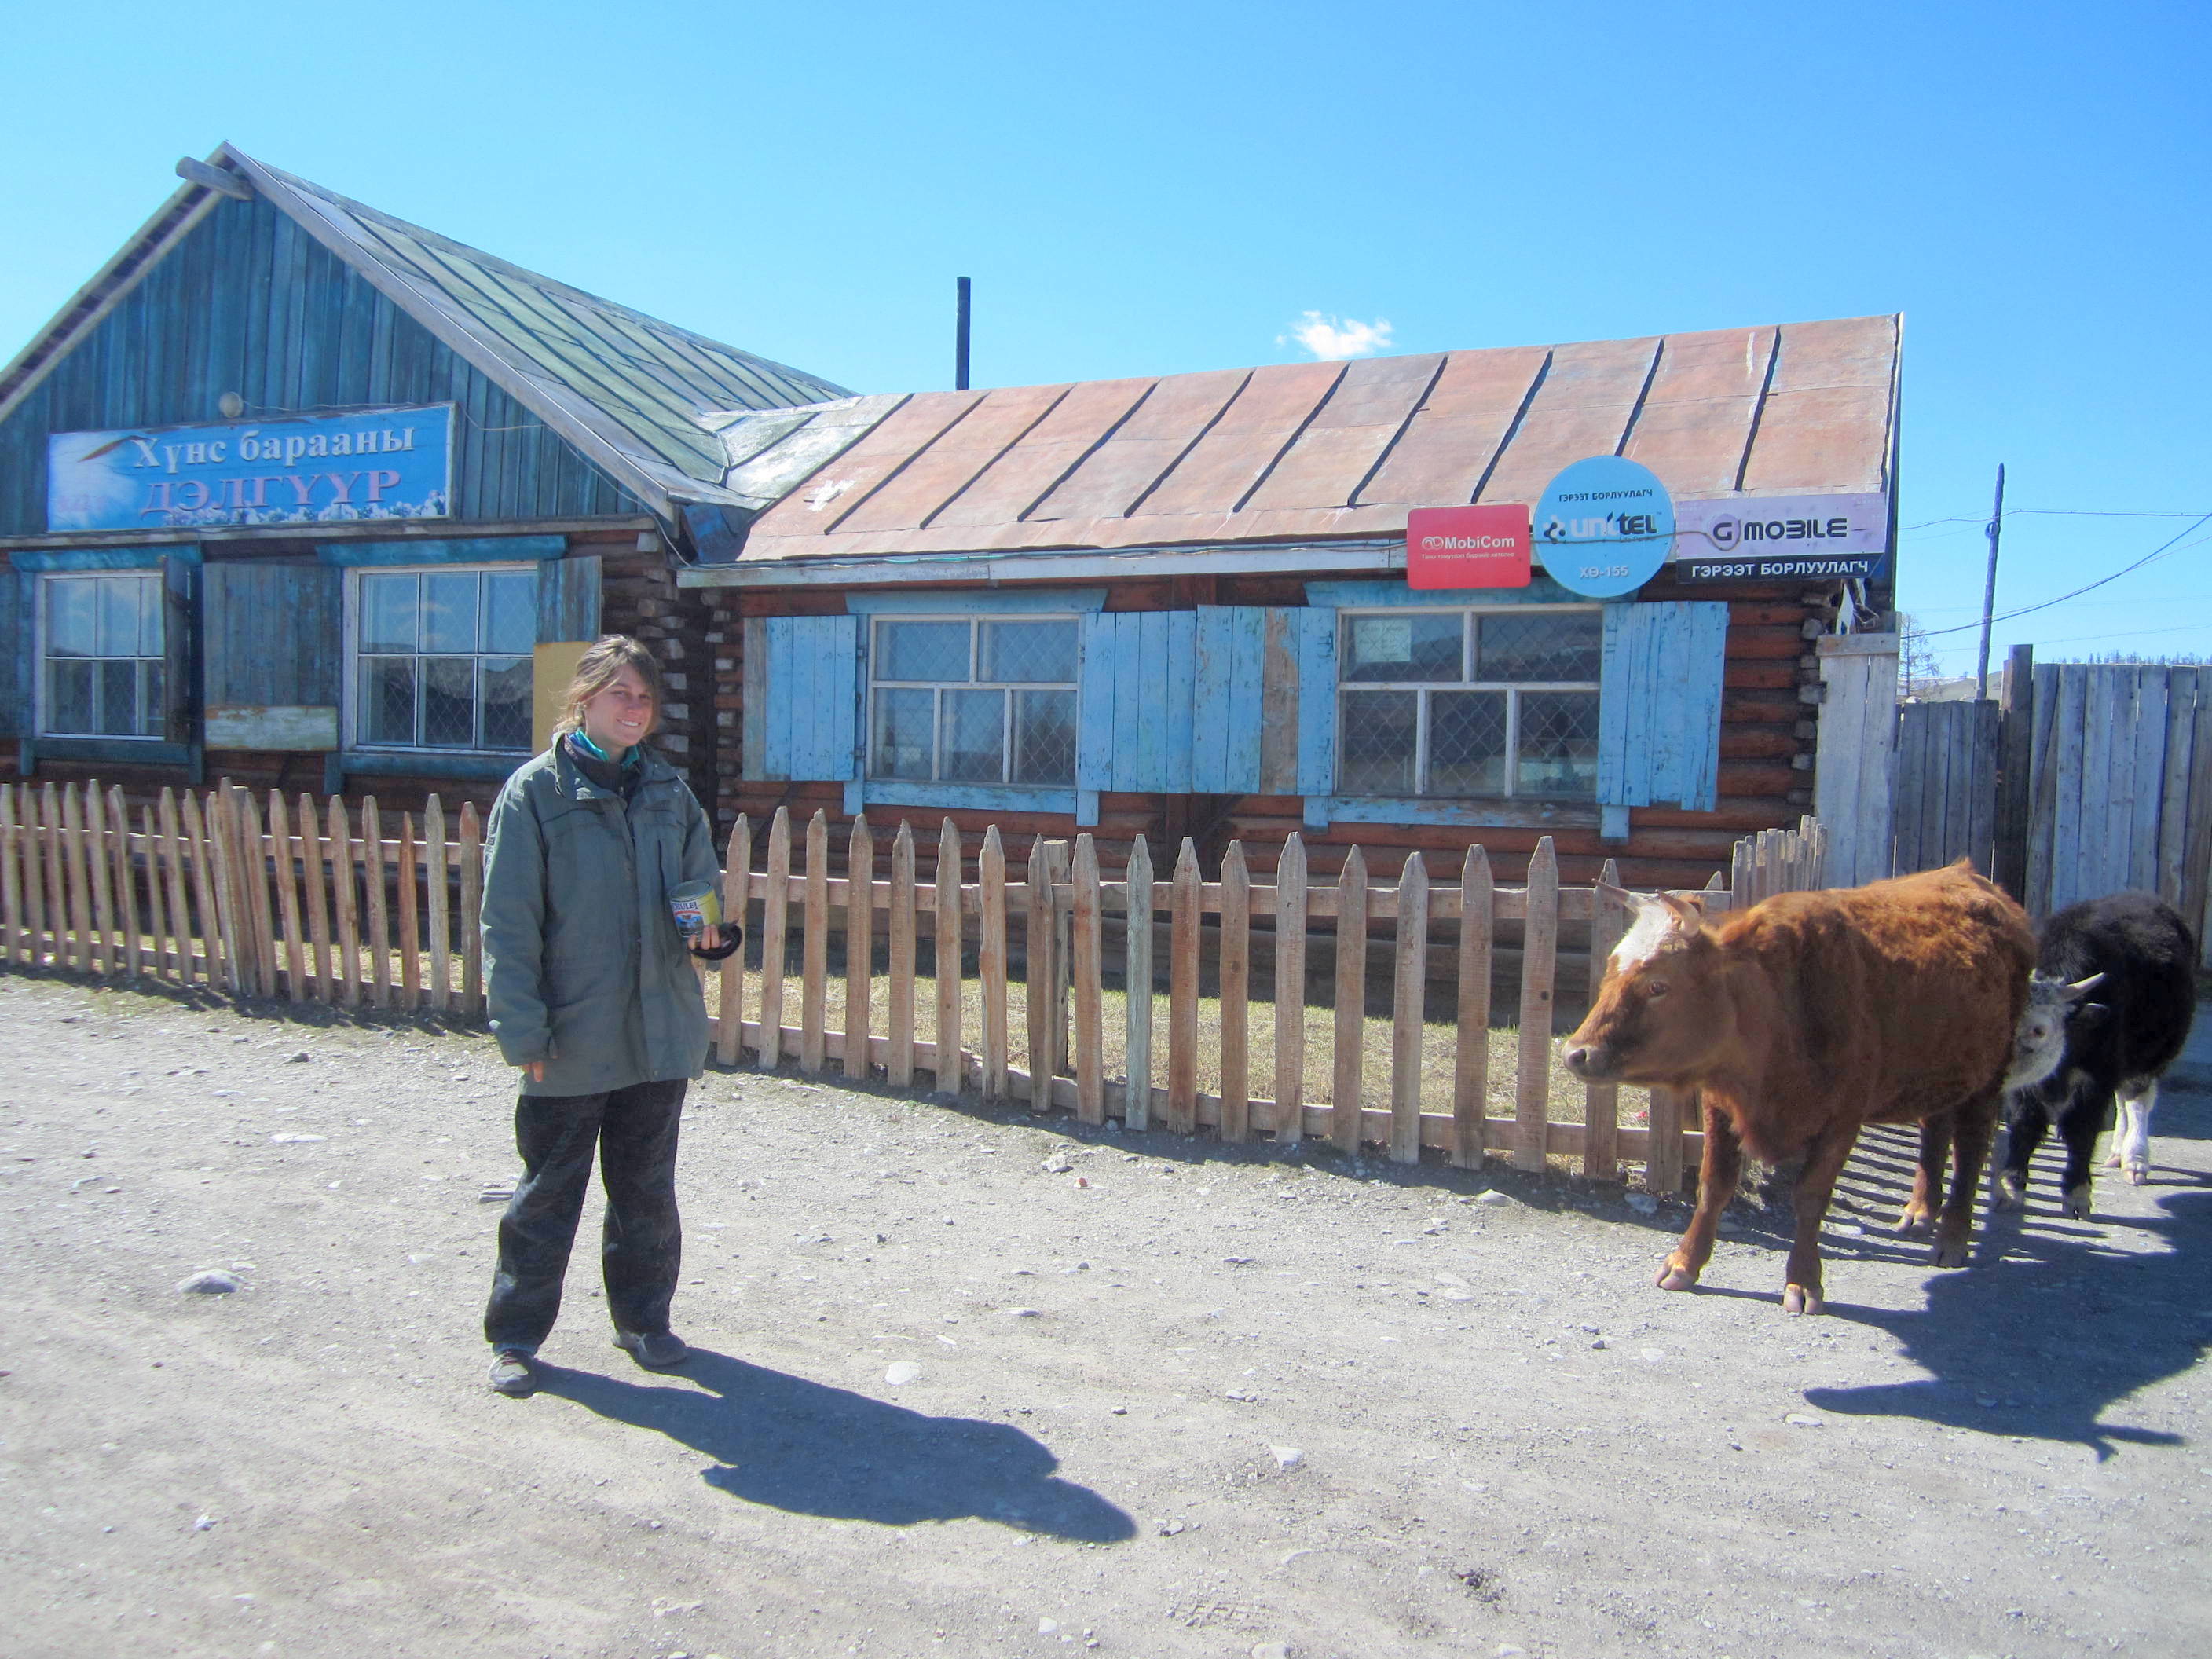 Animals wander freely through Khatgal, Mongolia